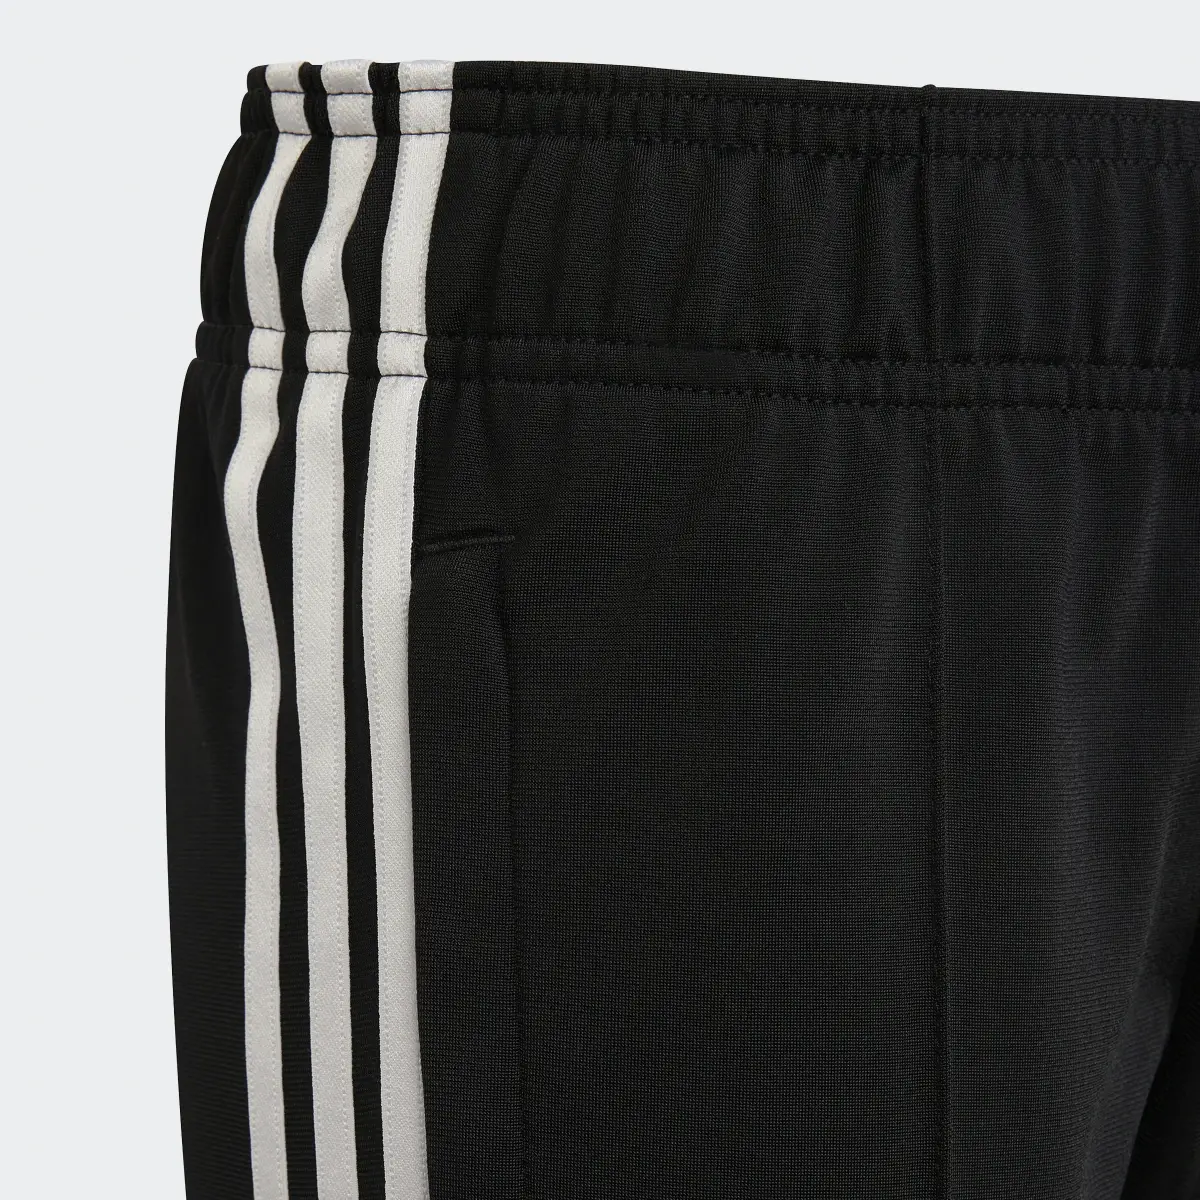 Adidas 3-Stripes Flared Pants. 3